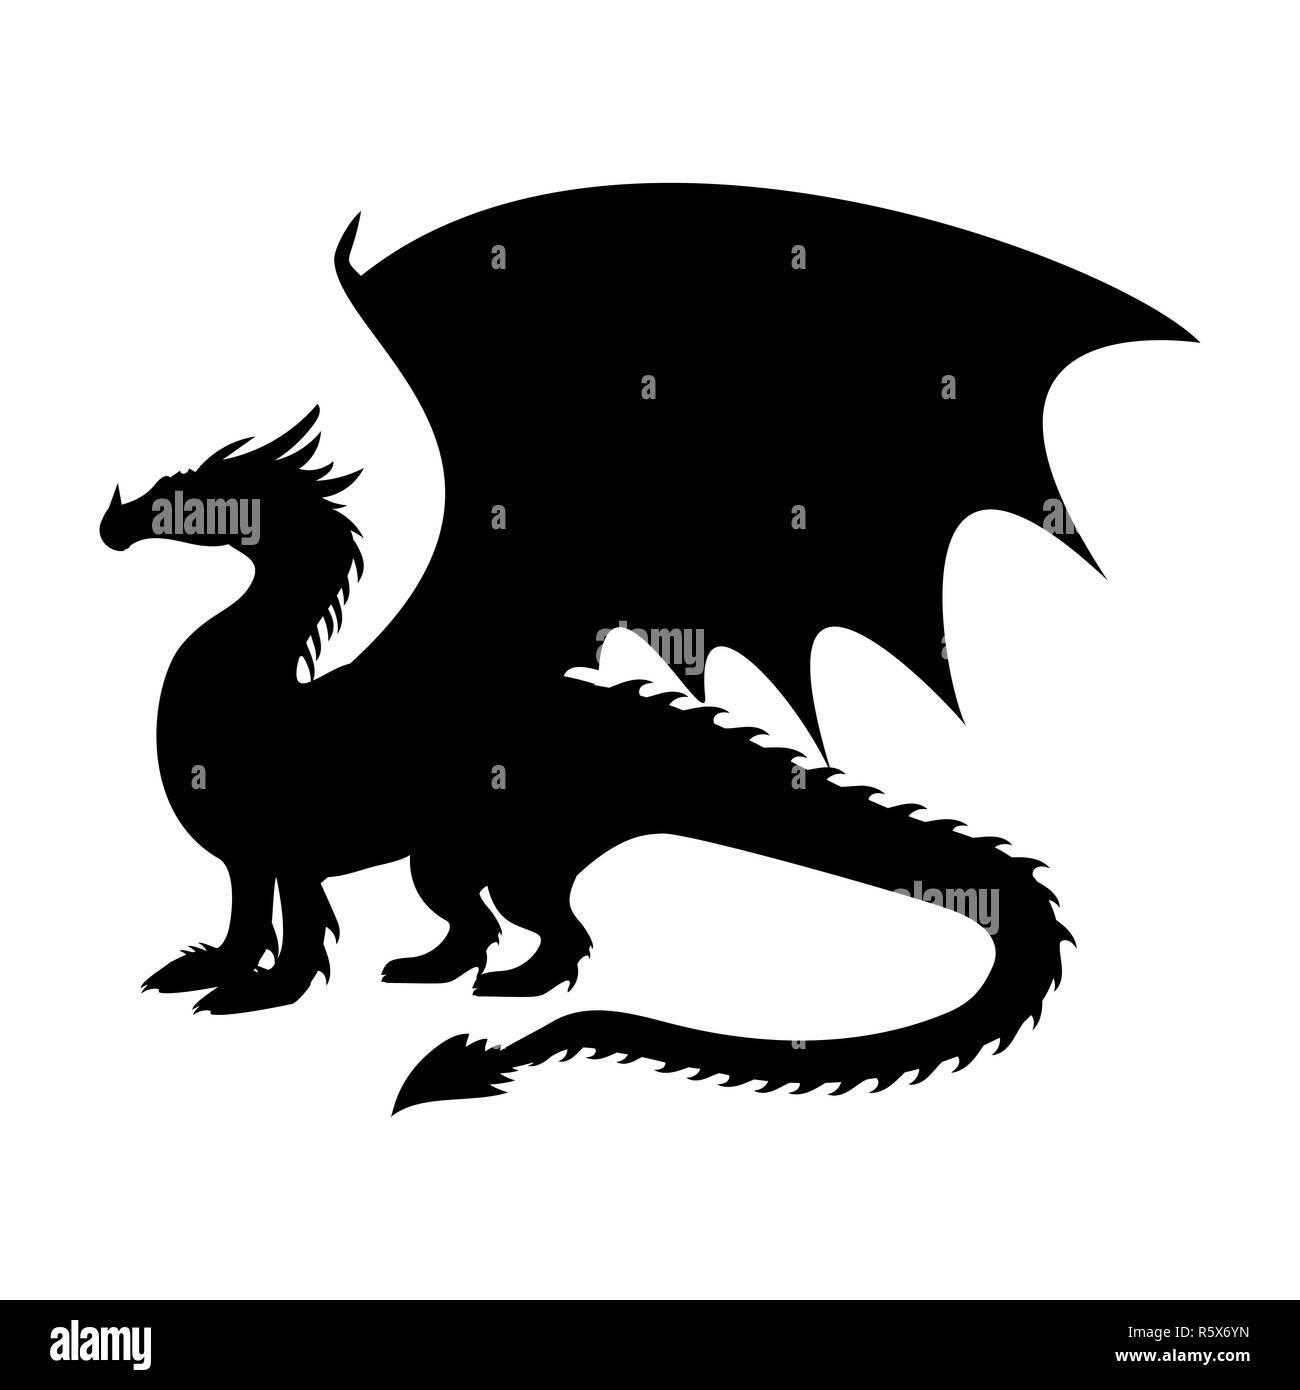 Dragon fantastic silhouette symbol mythology fantasy. Stock Photo